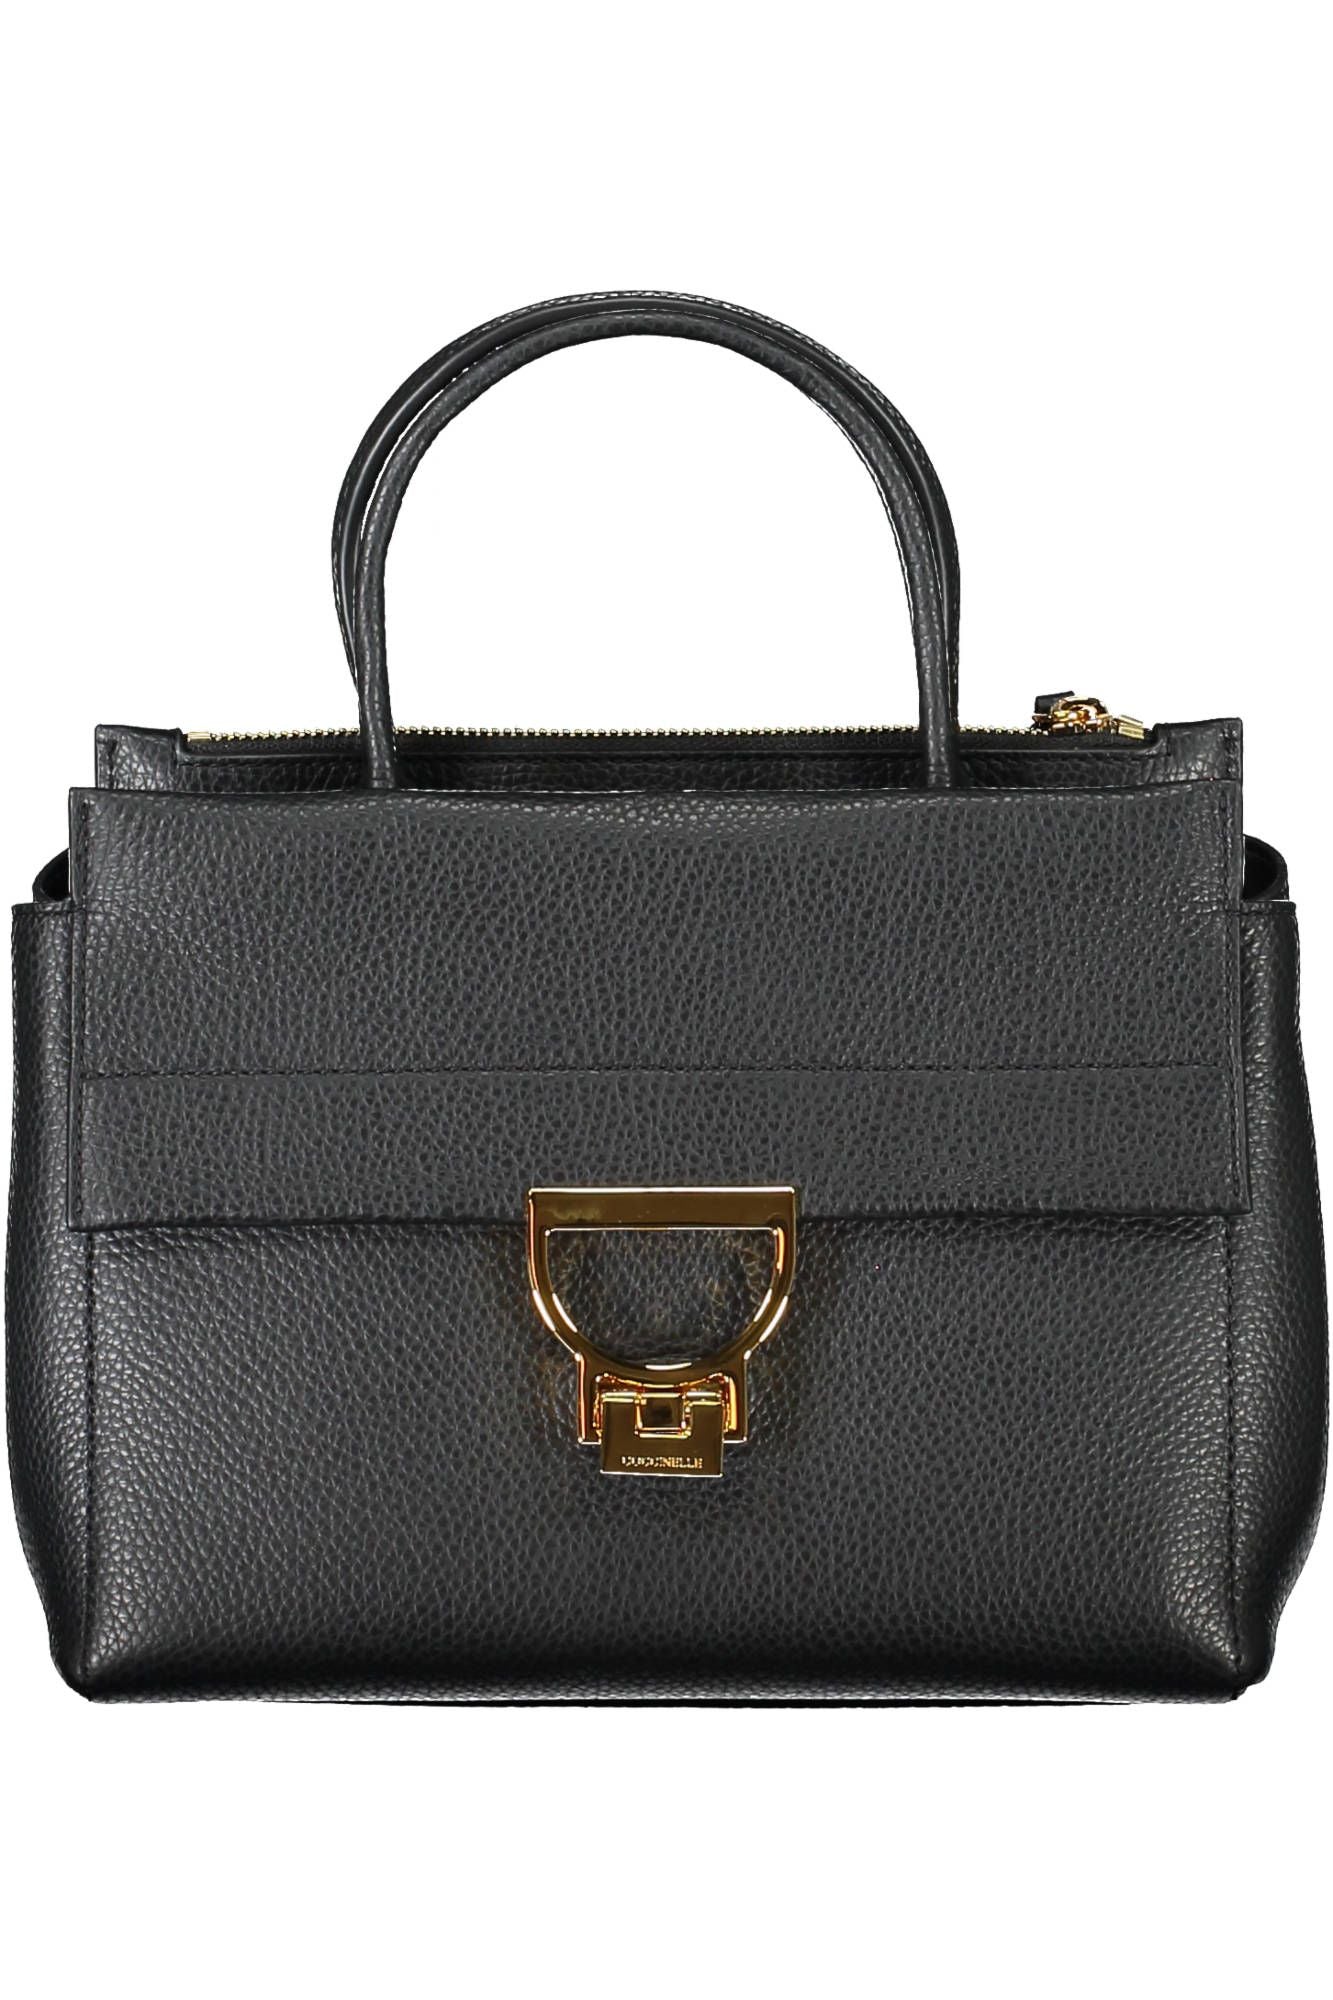 Elegant Black Leather Handbag With Versatile Straps